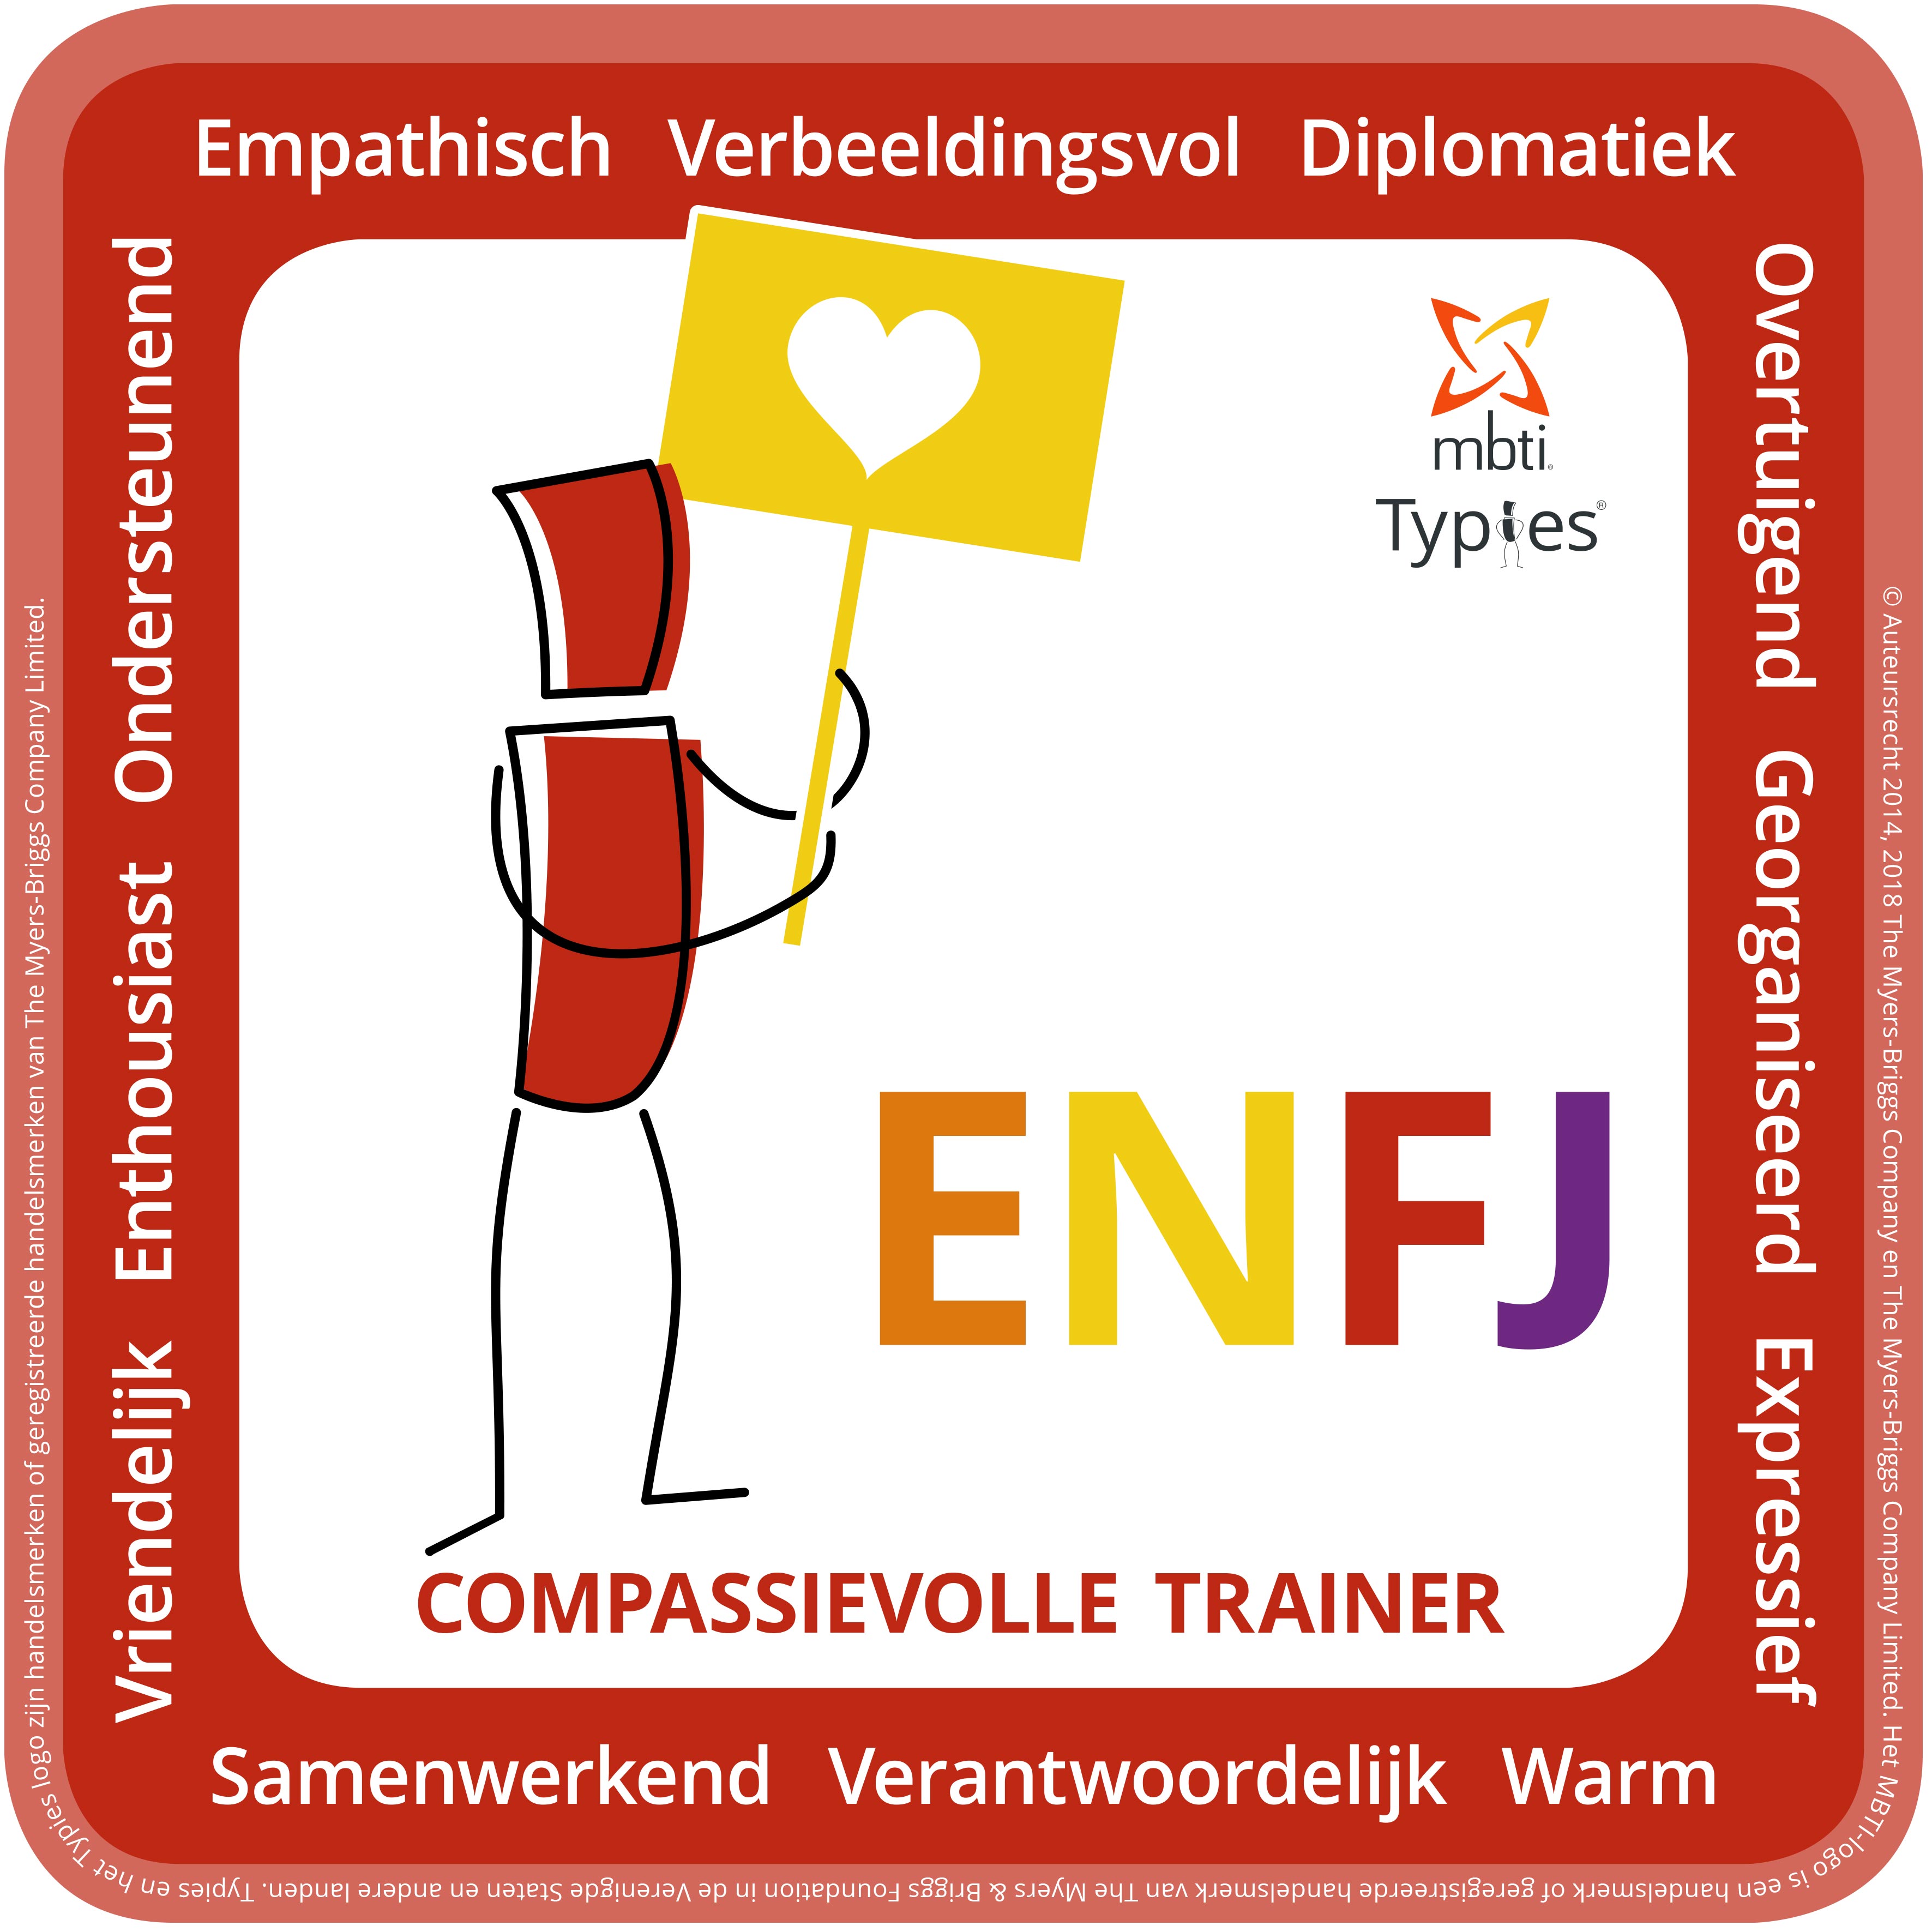 Typical characteristics of an ENFJ